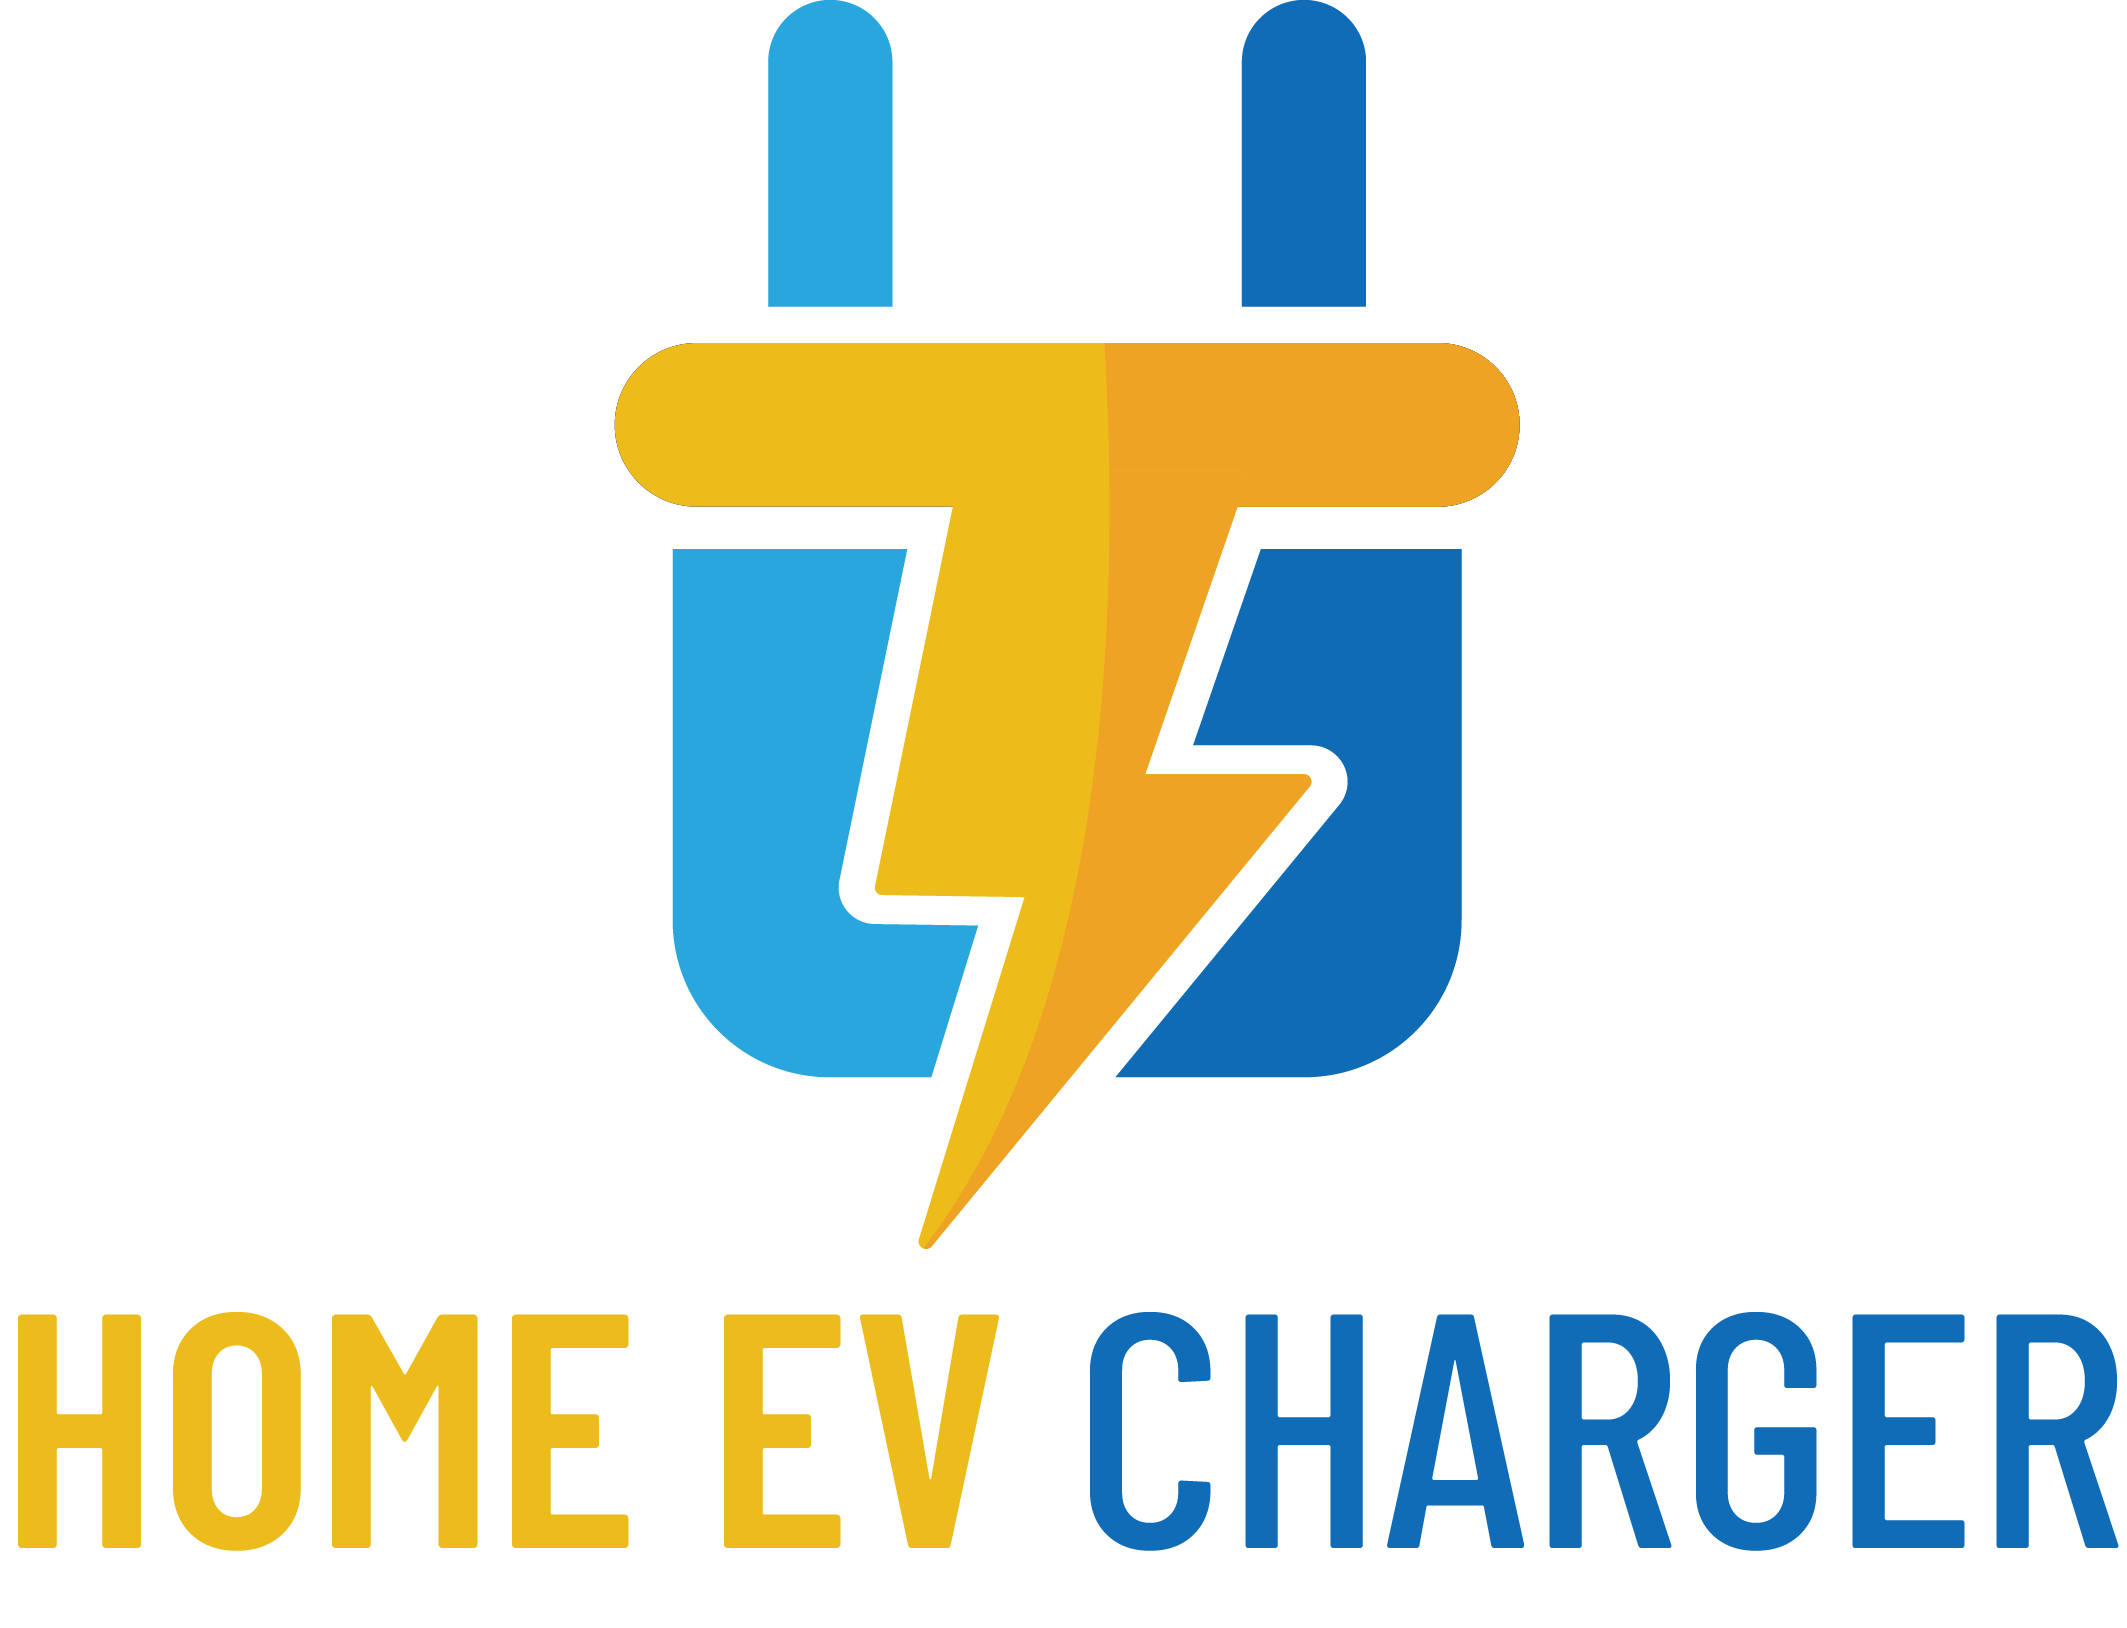 Home EV Charger logo 02